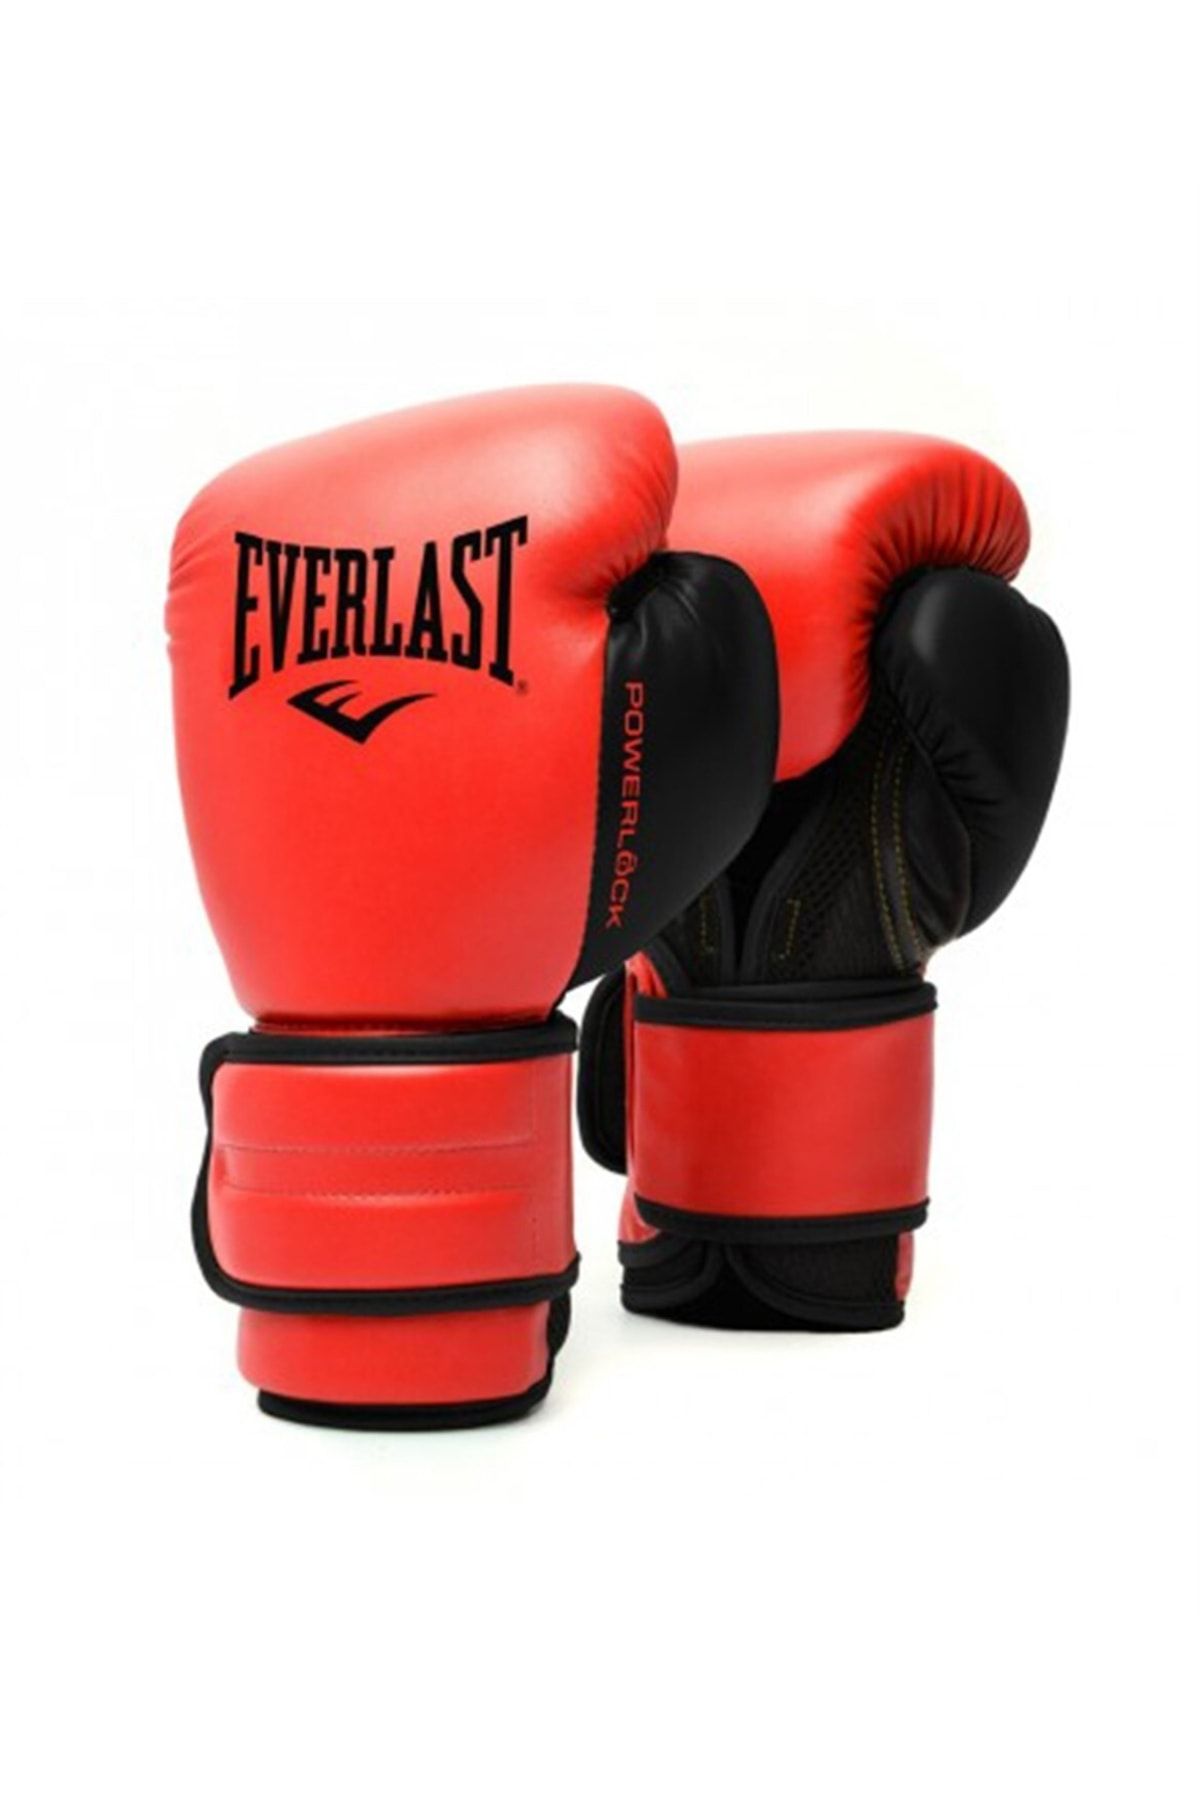 Everlast Powerlock Traınıng Gloves